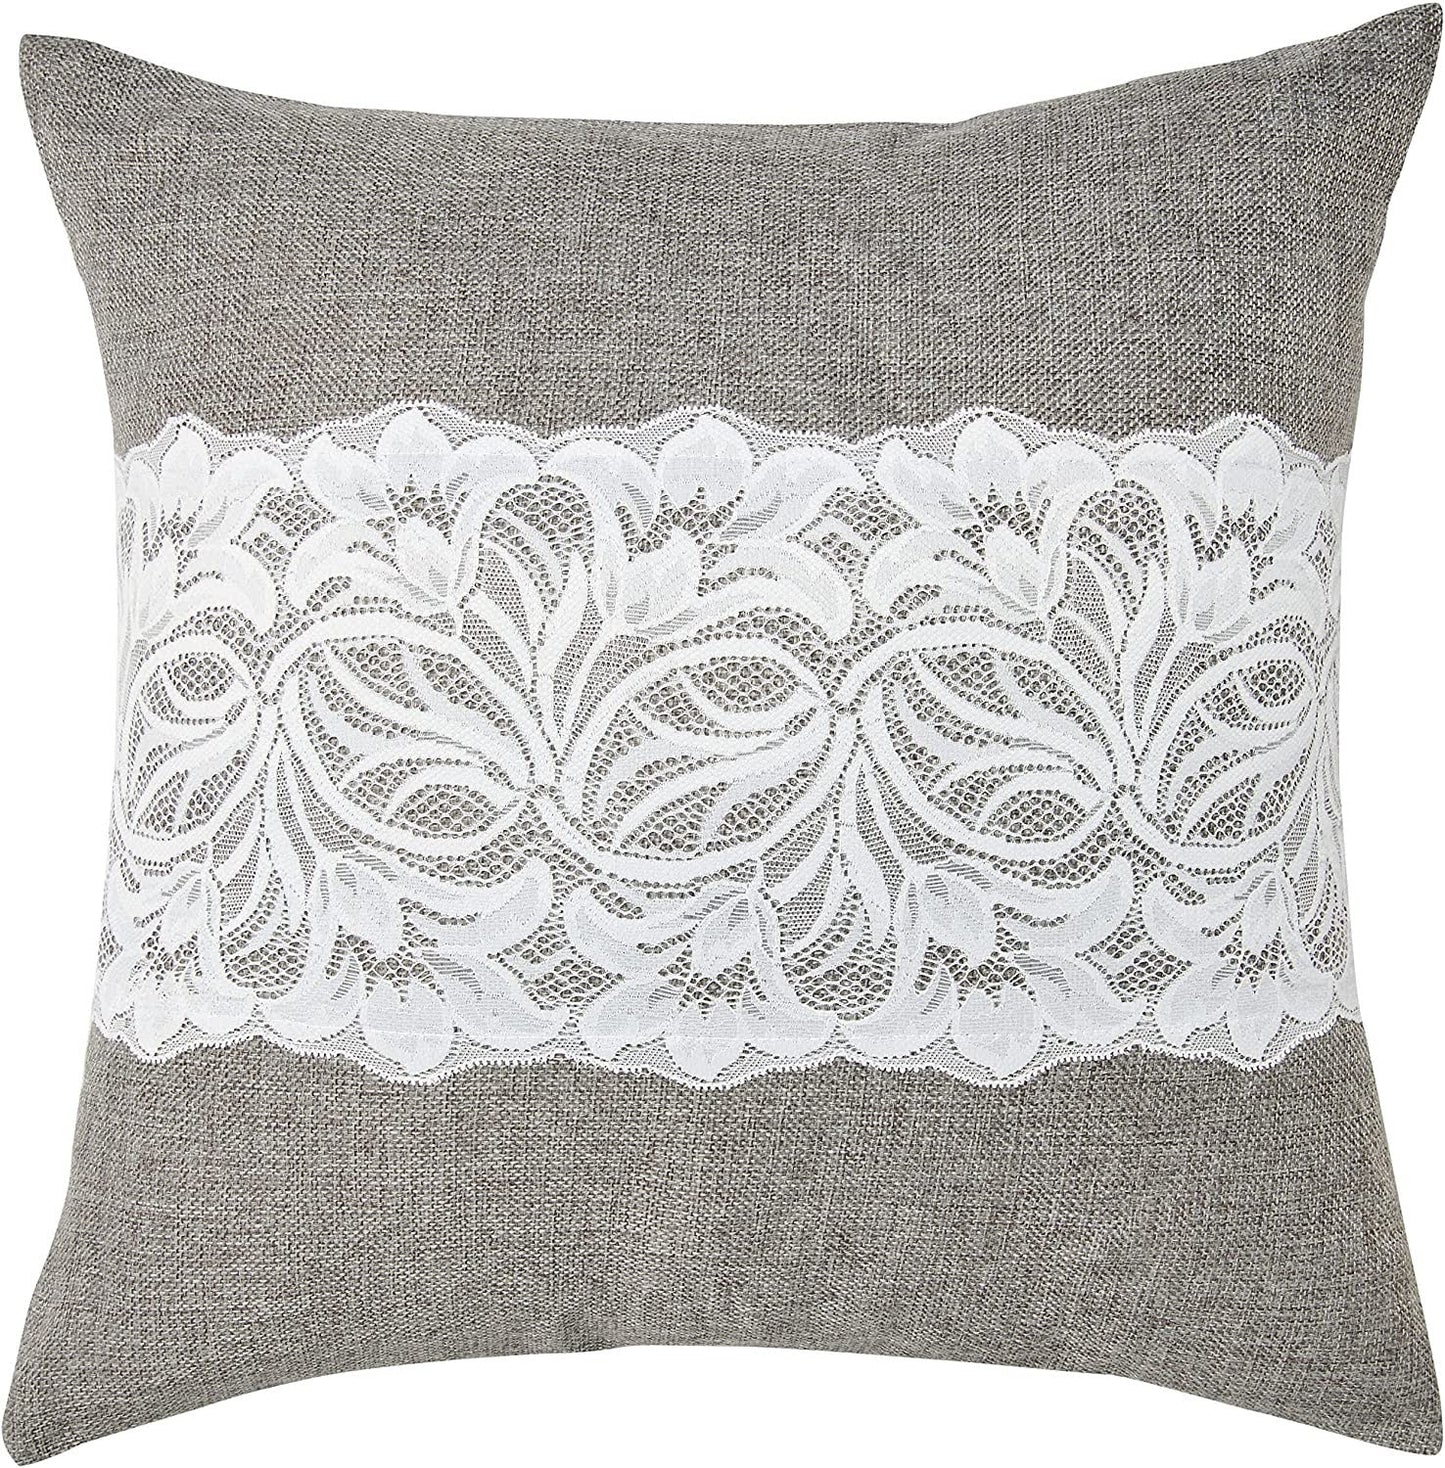 Eden Vintage Rustic Burlap Hessian Lace Pattern Decorative Throw Pillow Cover